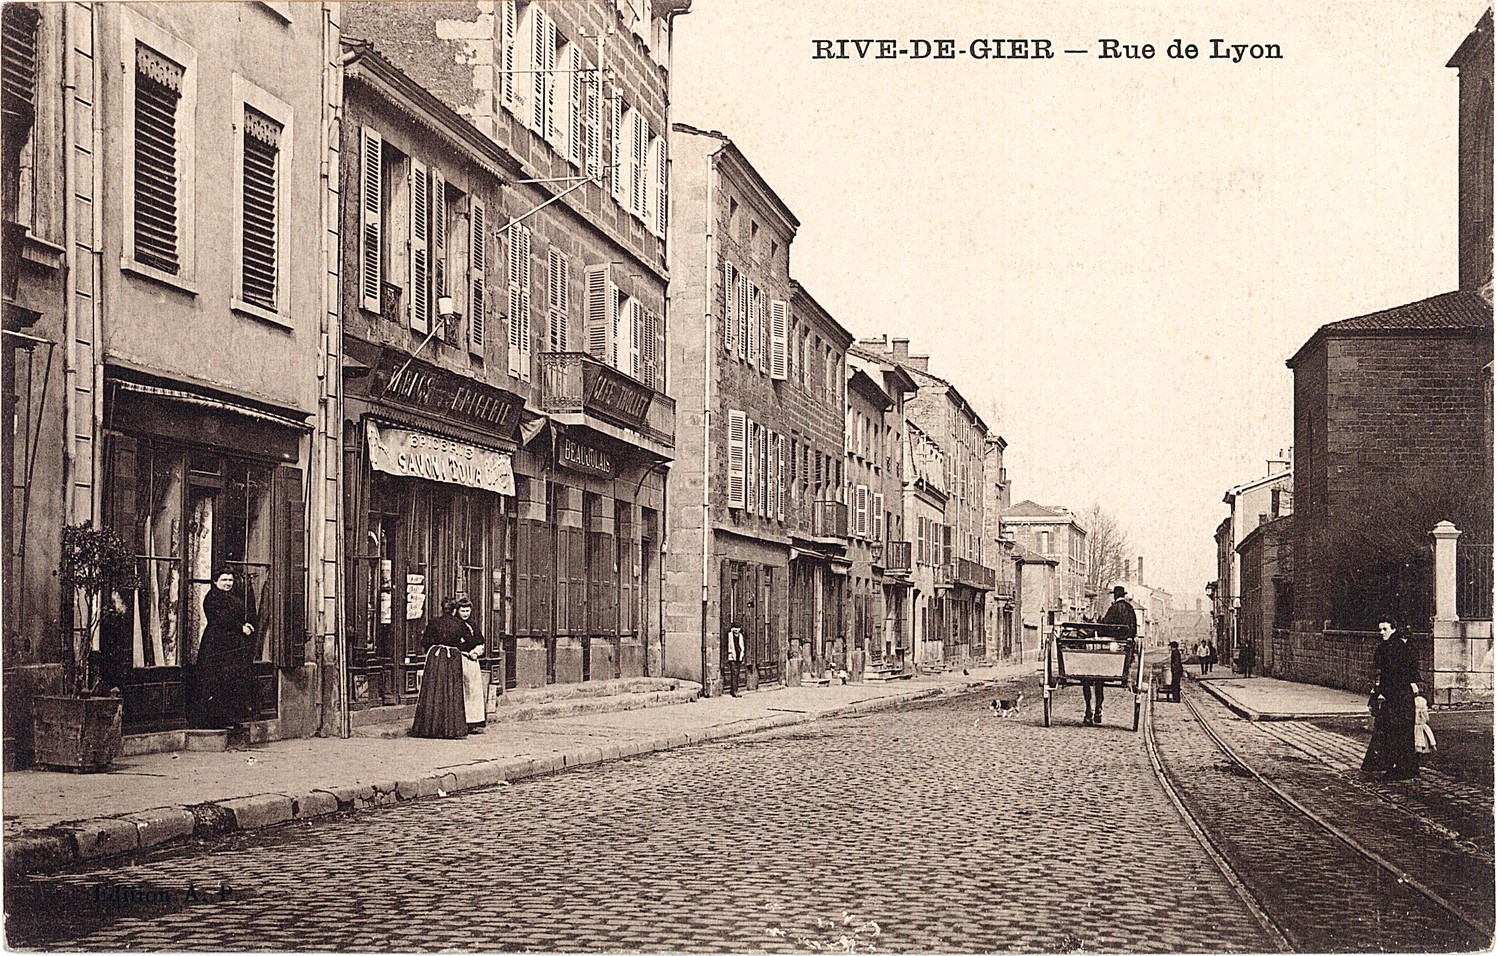 Rive-de-Gier (Loire) : Rue de Lyon